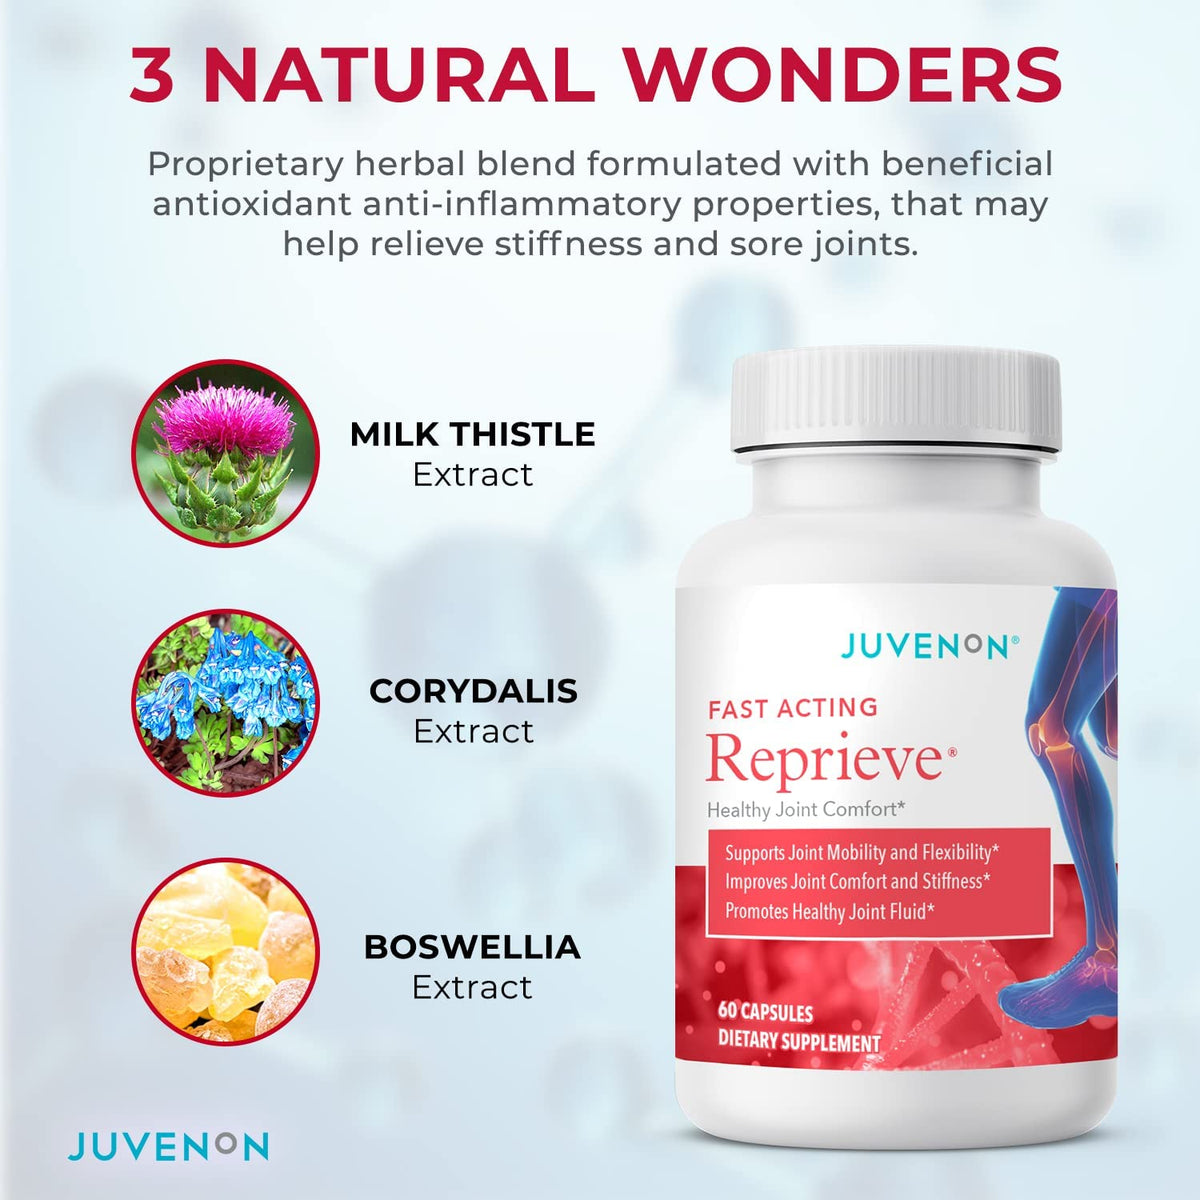 Juvenon Reprieve ingredients milk thistle, corydalis, and boswellia